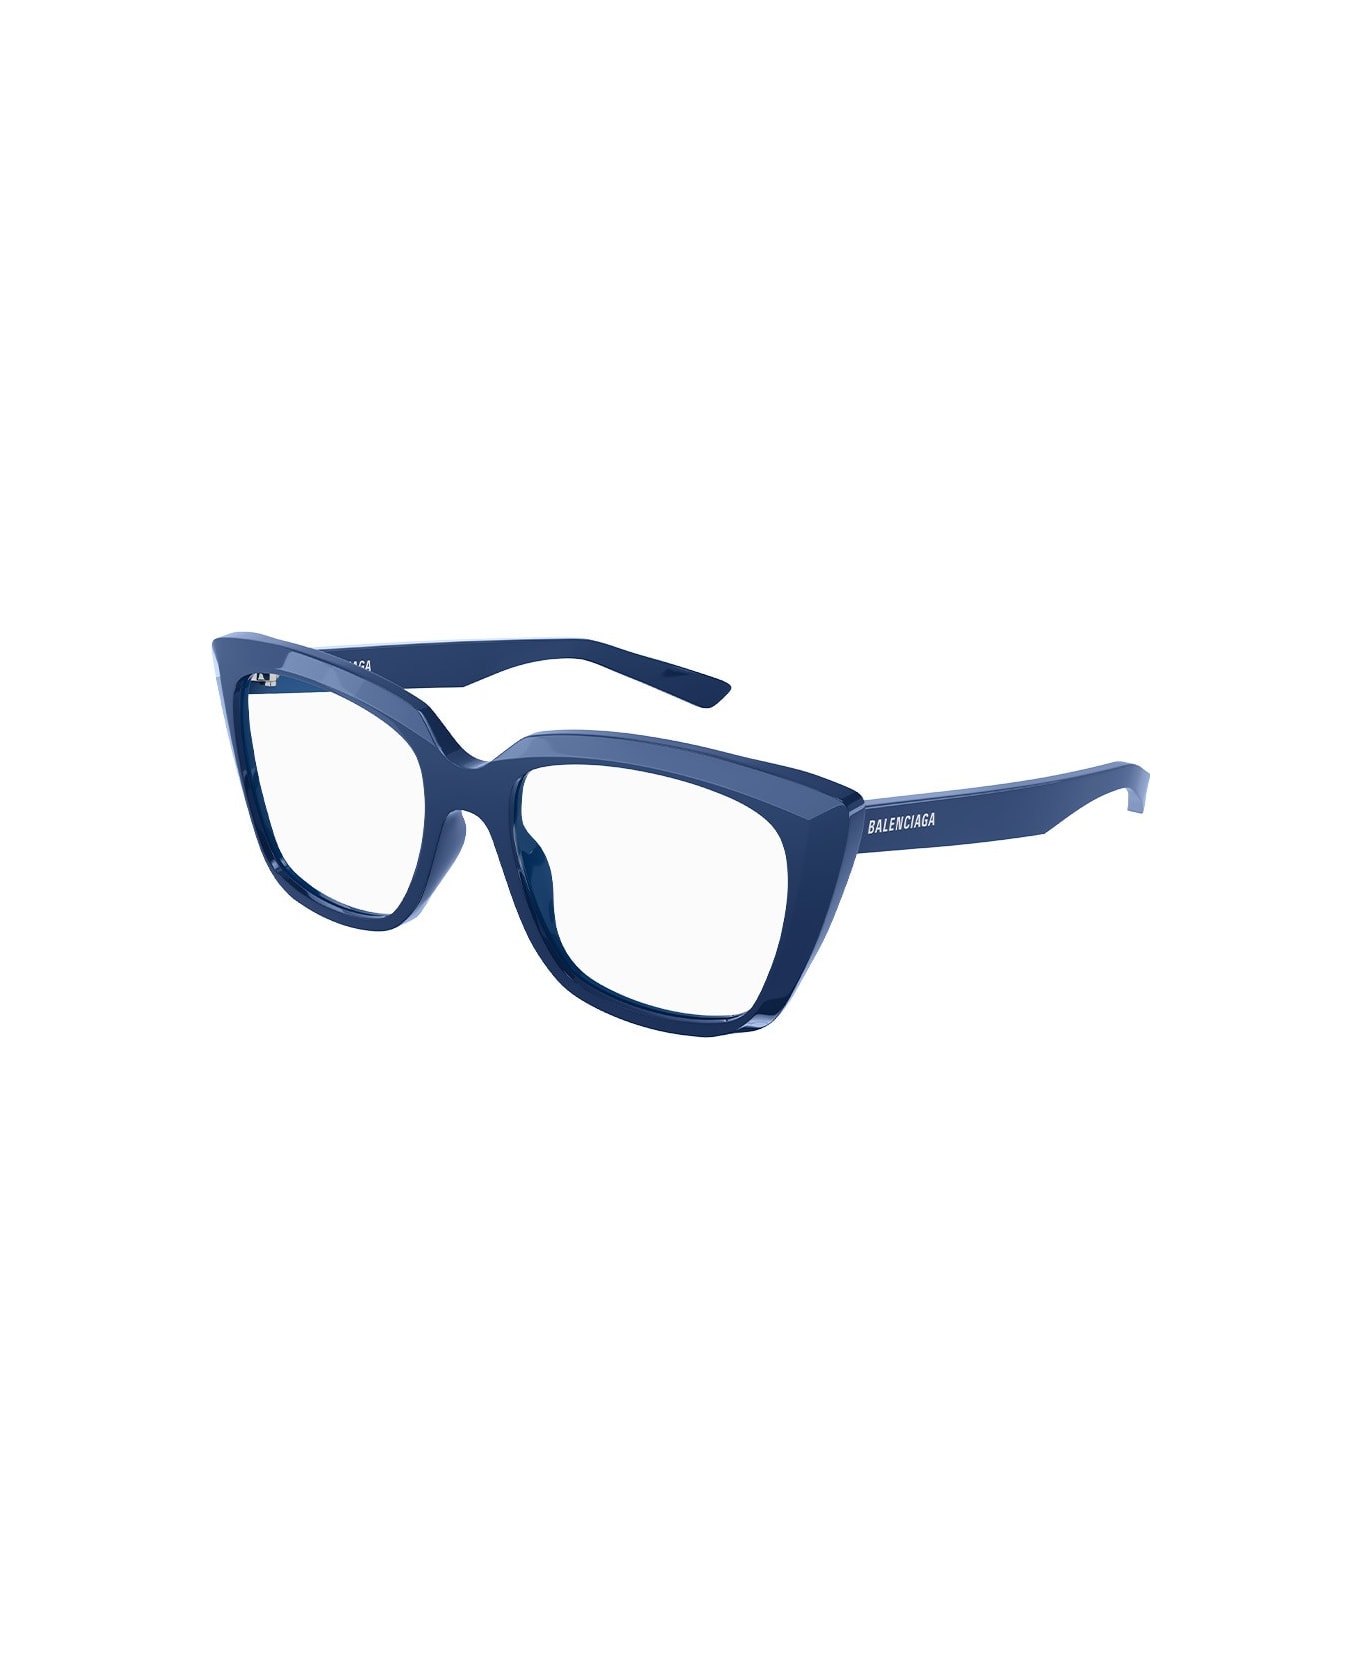 Balenciaga Eyewear Glasses - Blu アイウェア